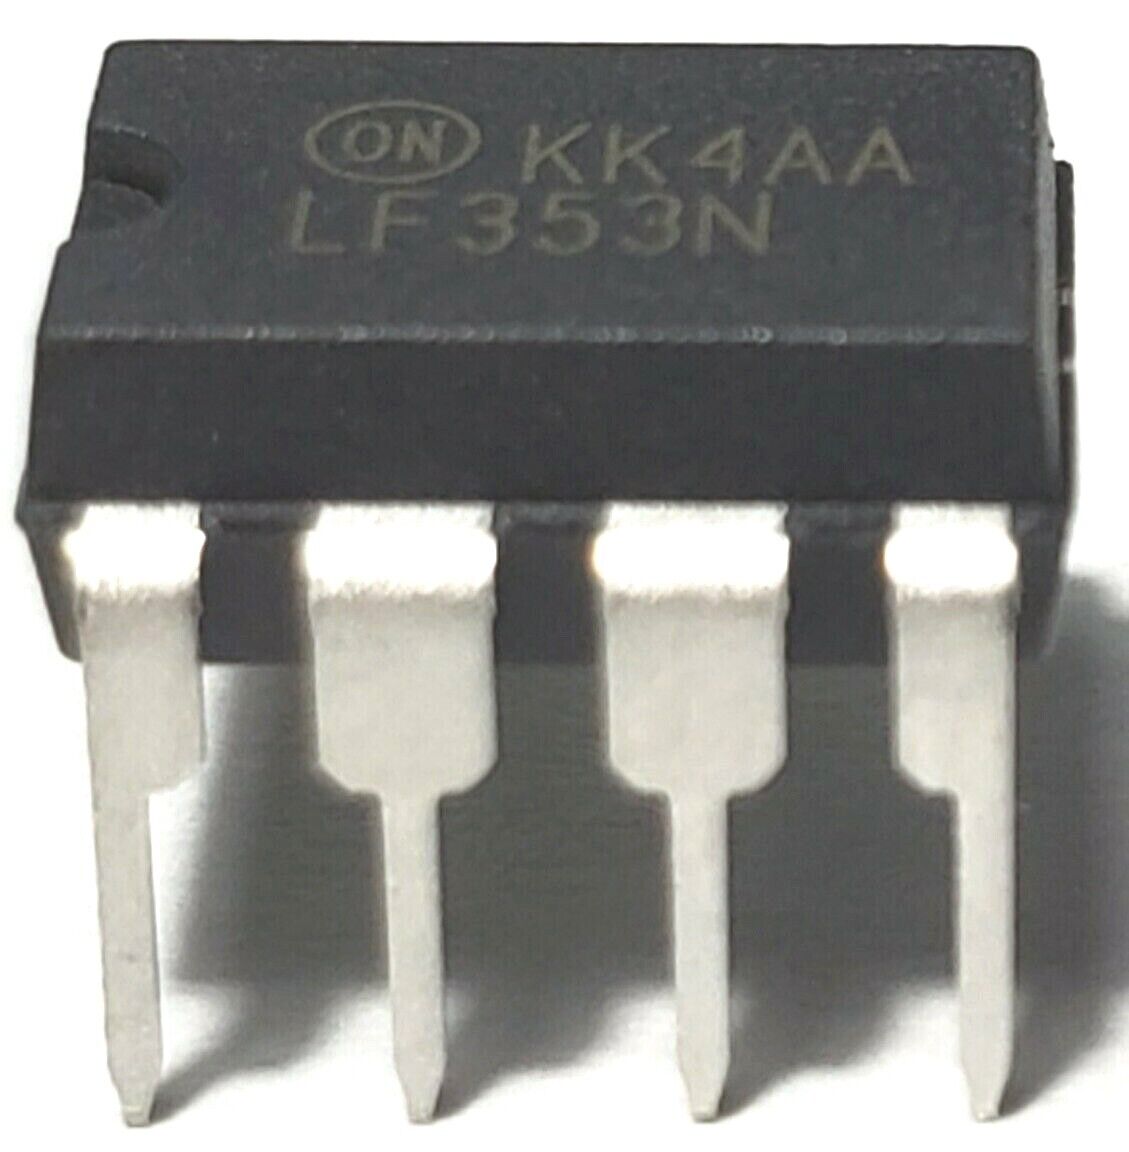 5PCS ON Semiconductor LF353N LF353 Dual Wide Bandwidth JFET Input Op-Amp IC New